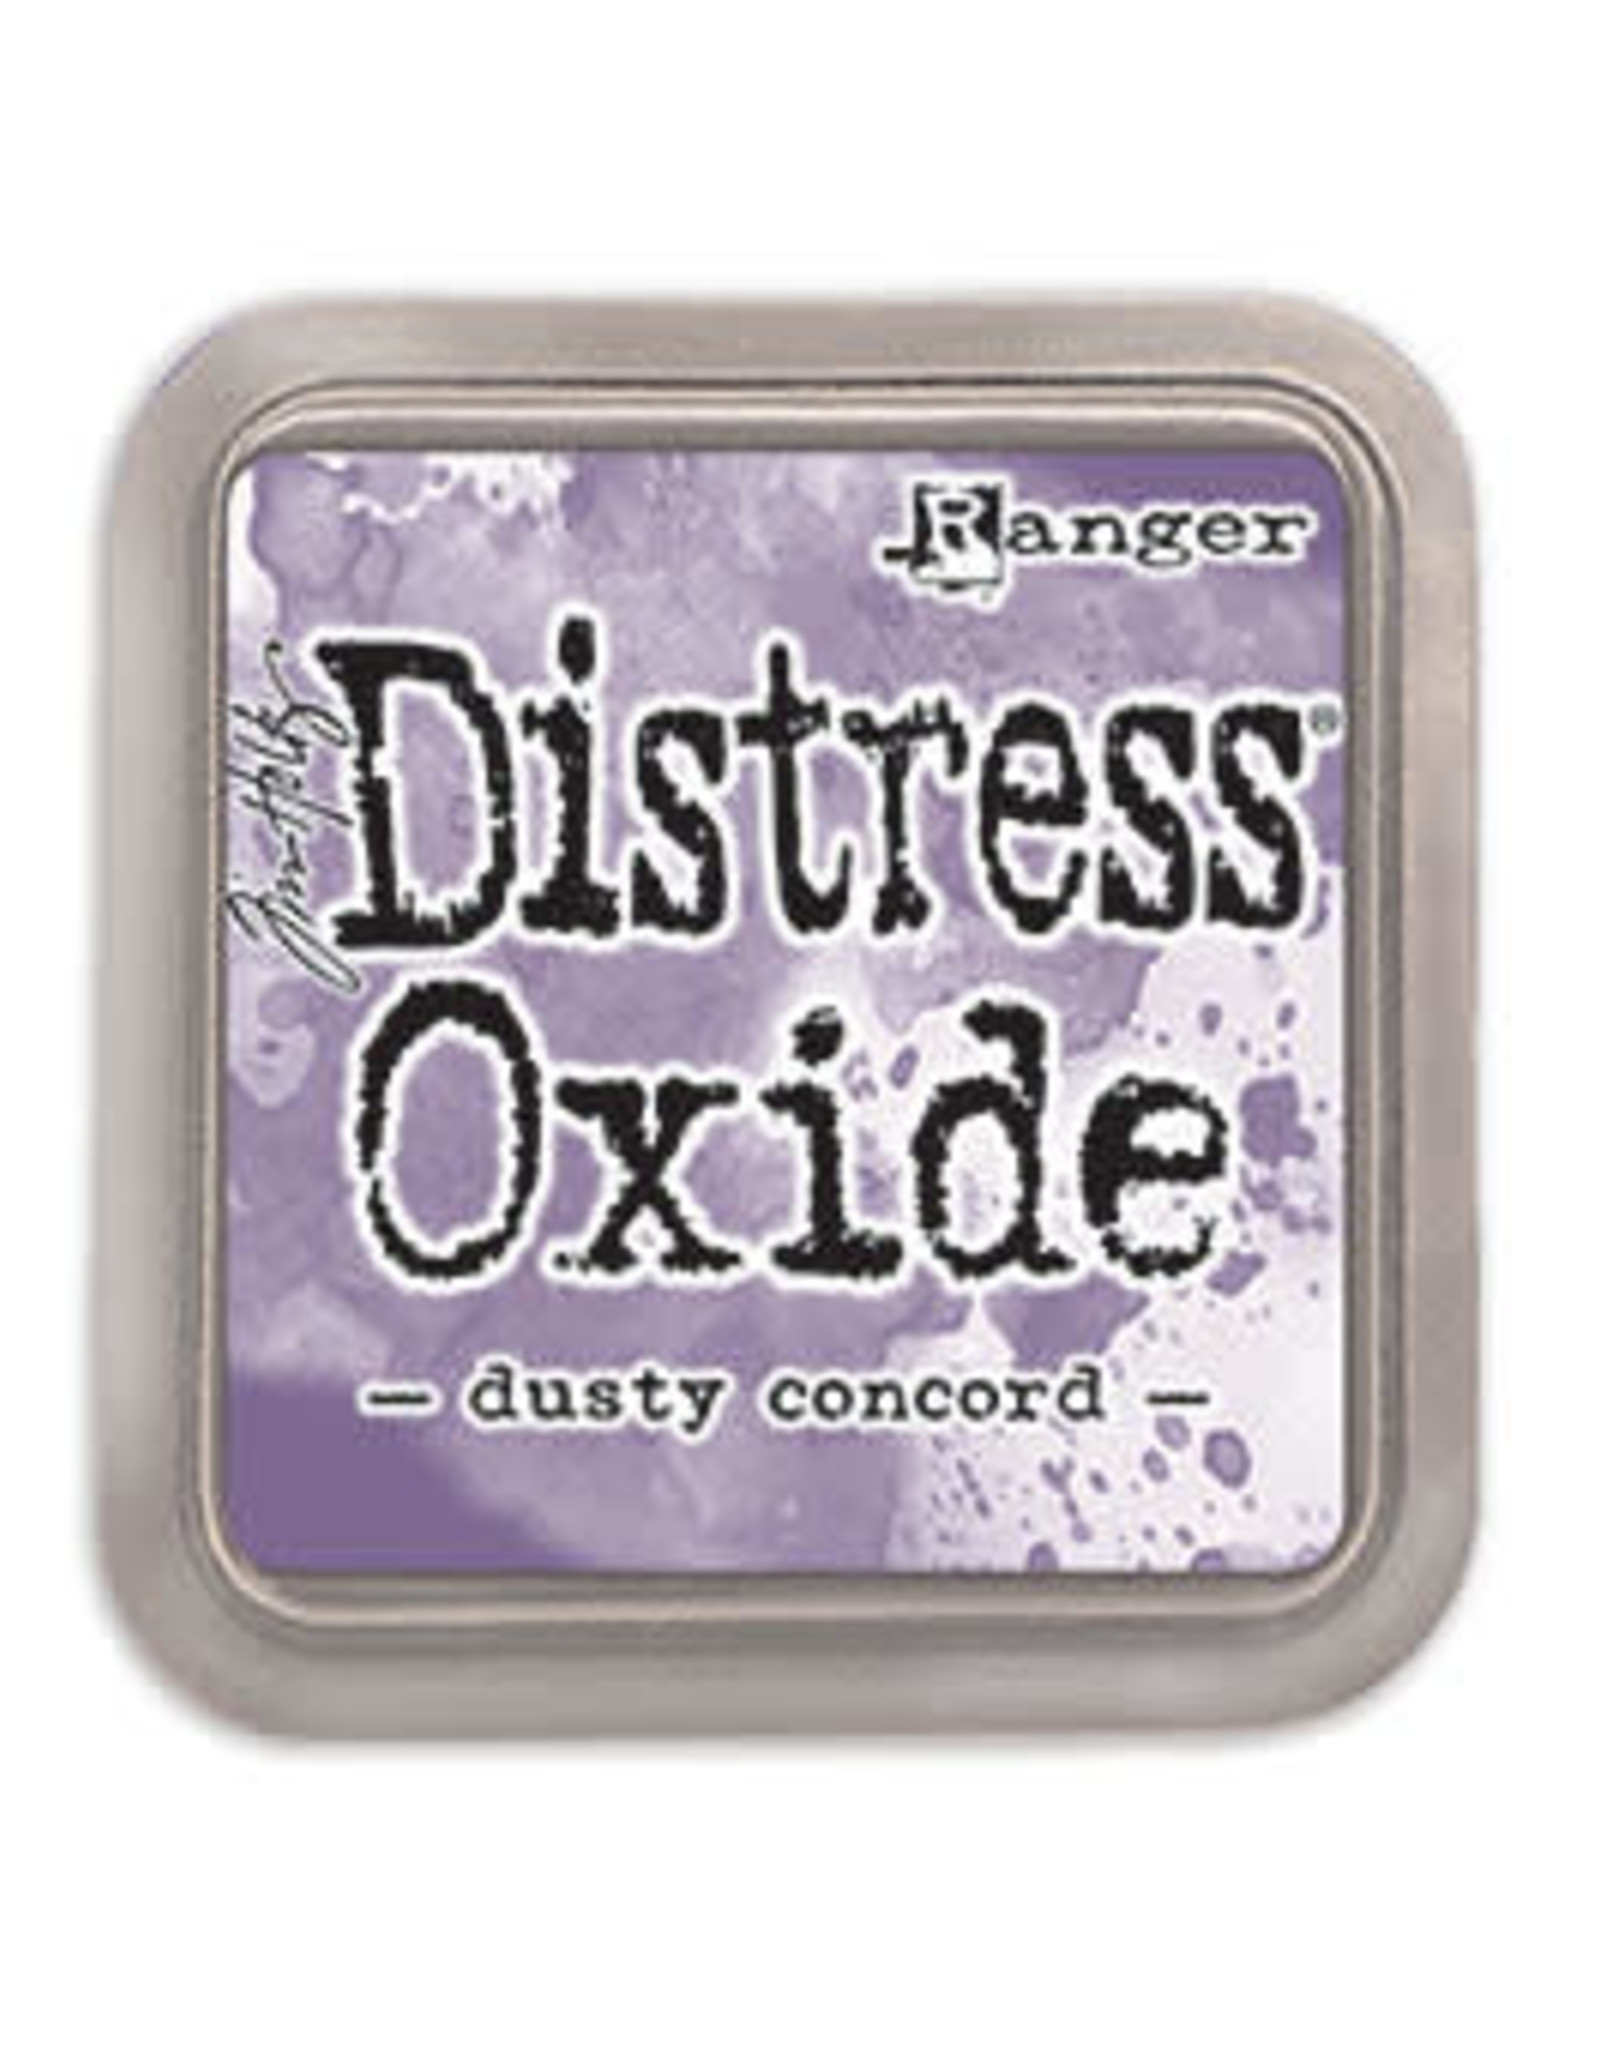 Tim Holtz - Ranger Distress Oxide Dusty Concord